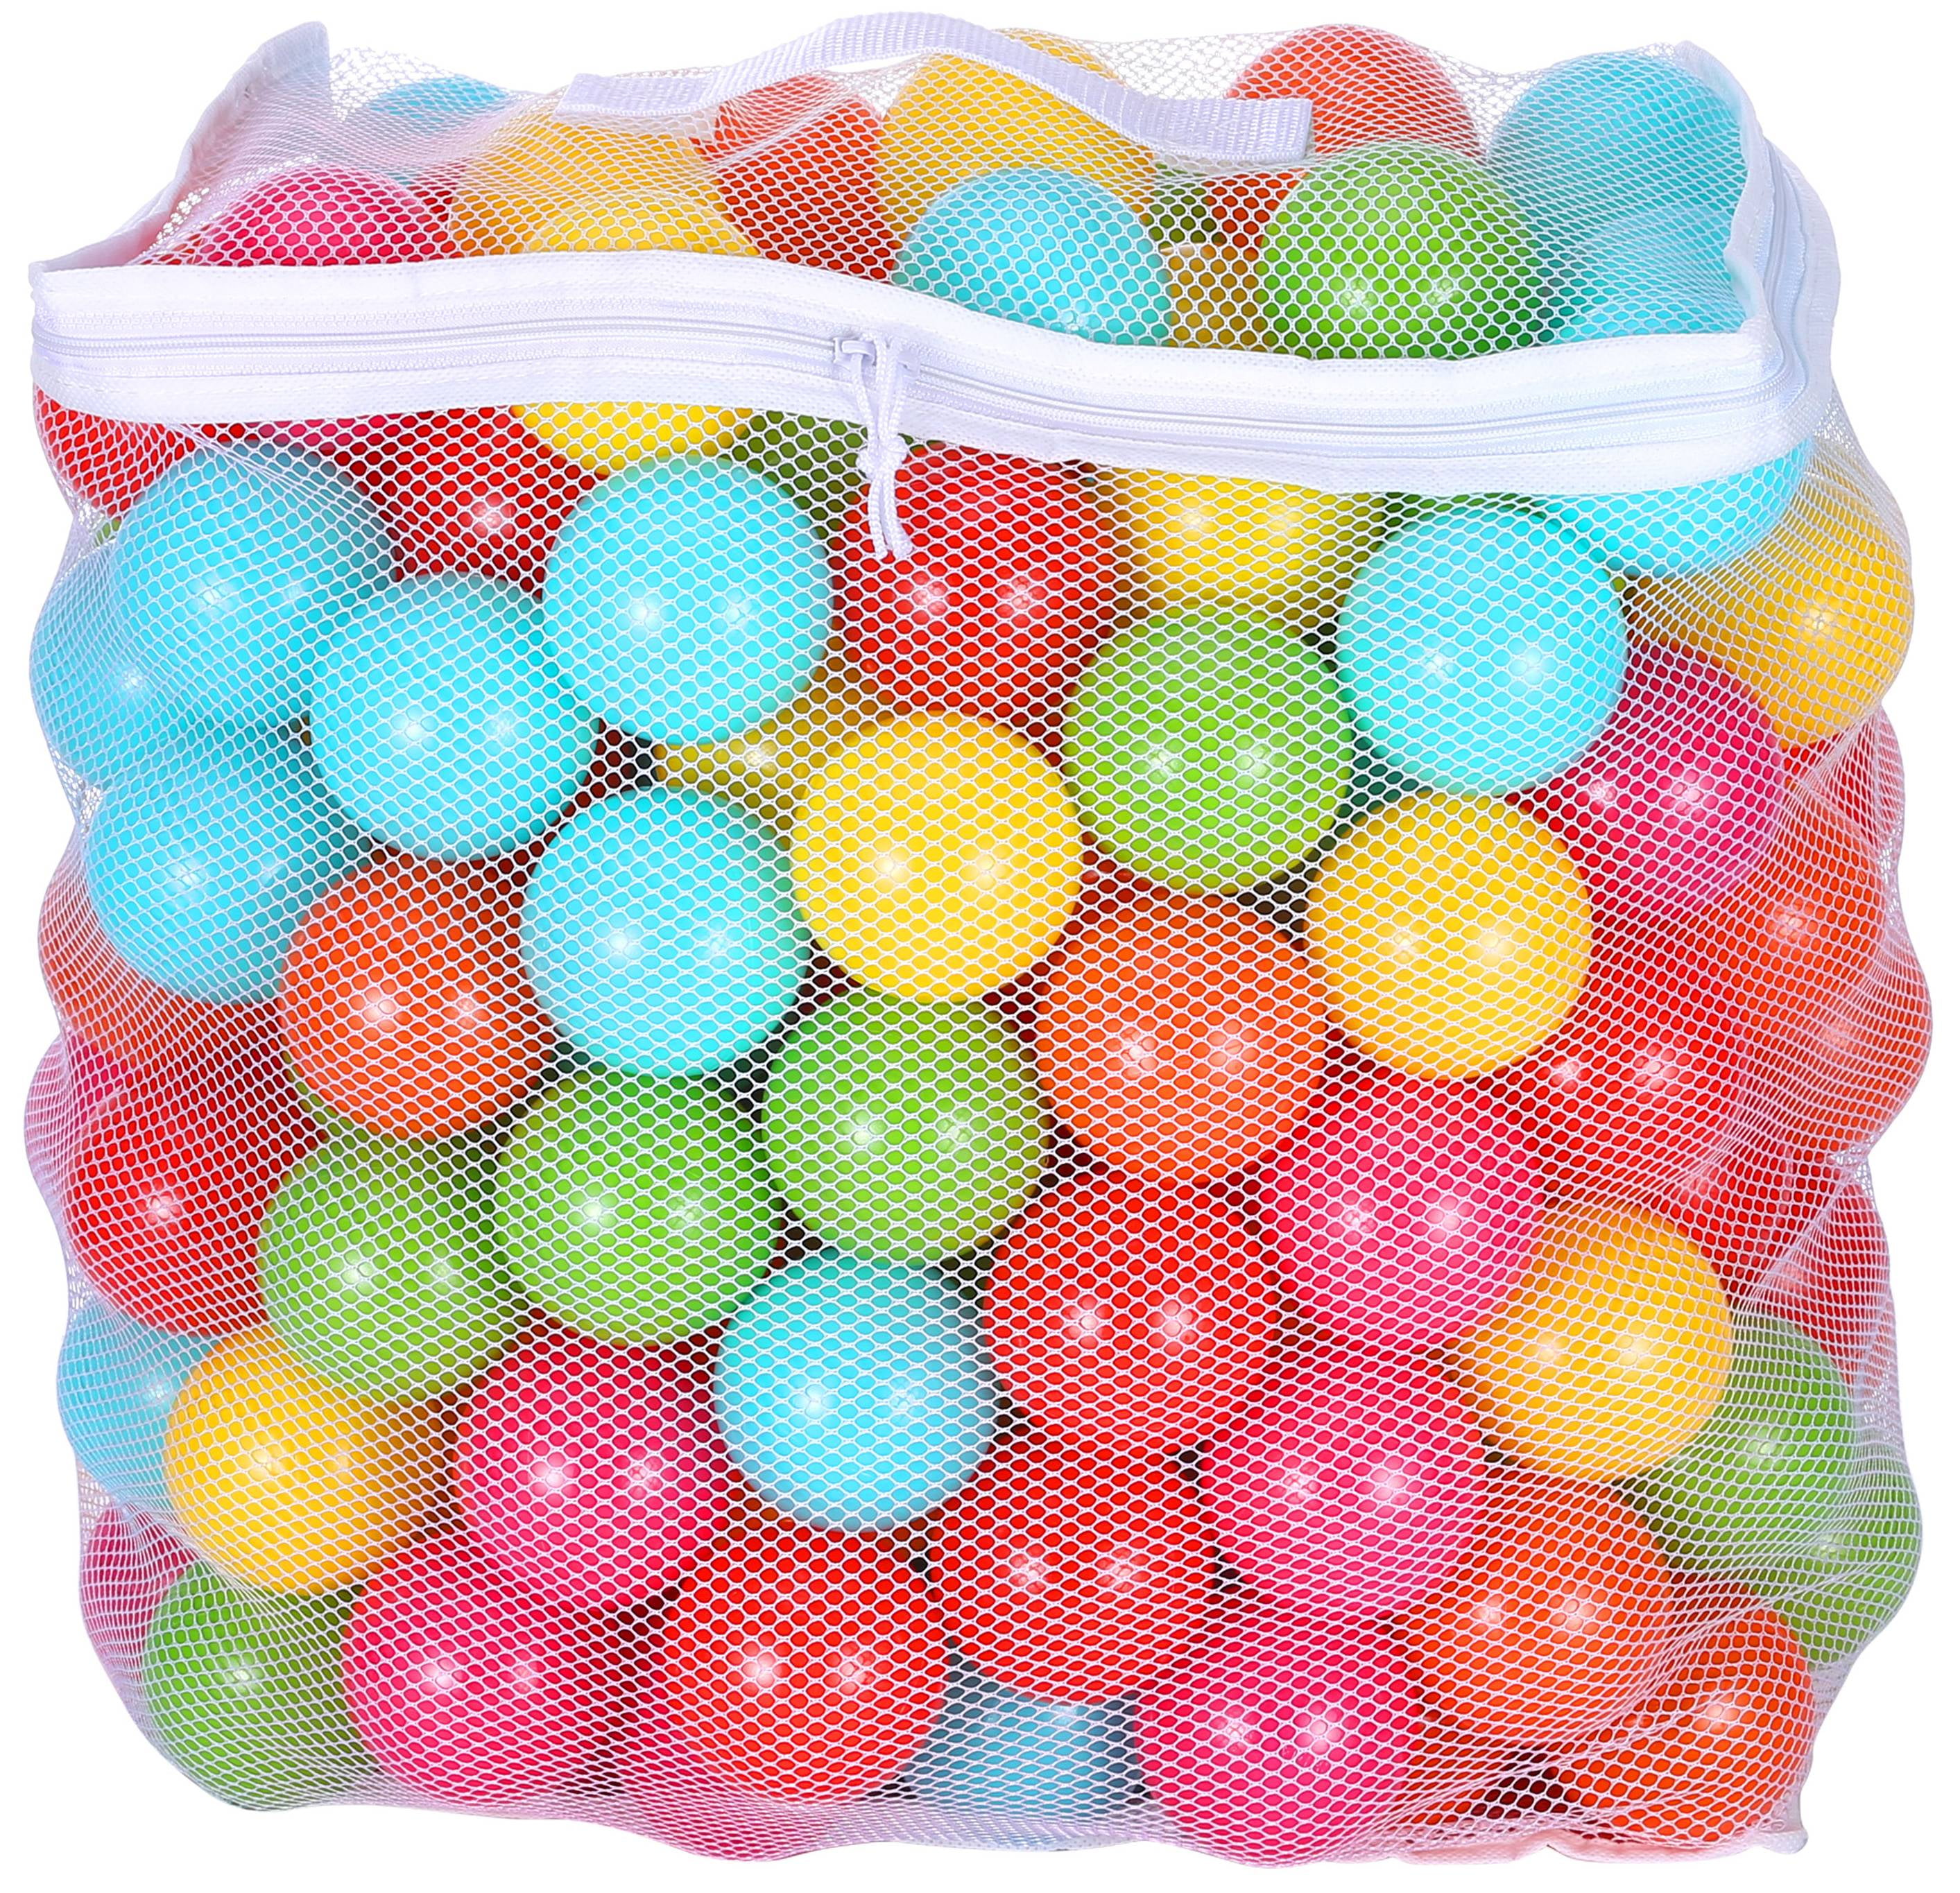 ausuky 100 pcs Play Balls Soft Plastic Non-Toxic Phthalate-Free Crush-Proof Pit Balls Baby Kids Toy Swim Pit Toys